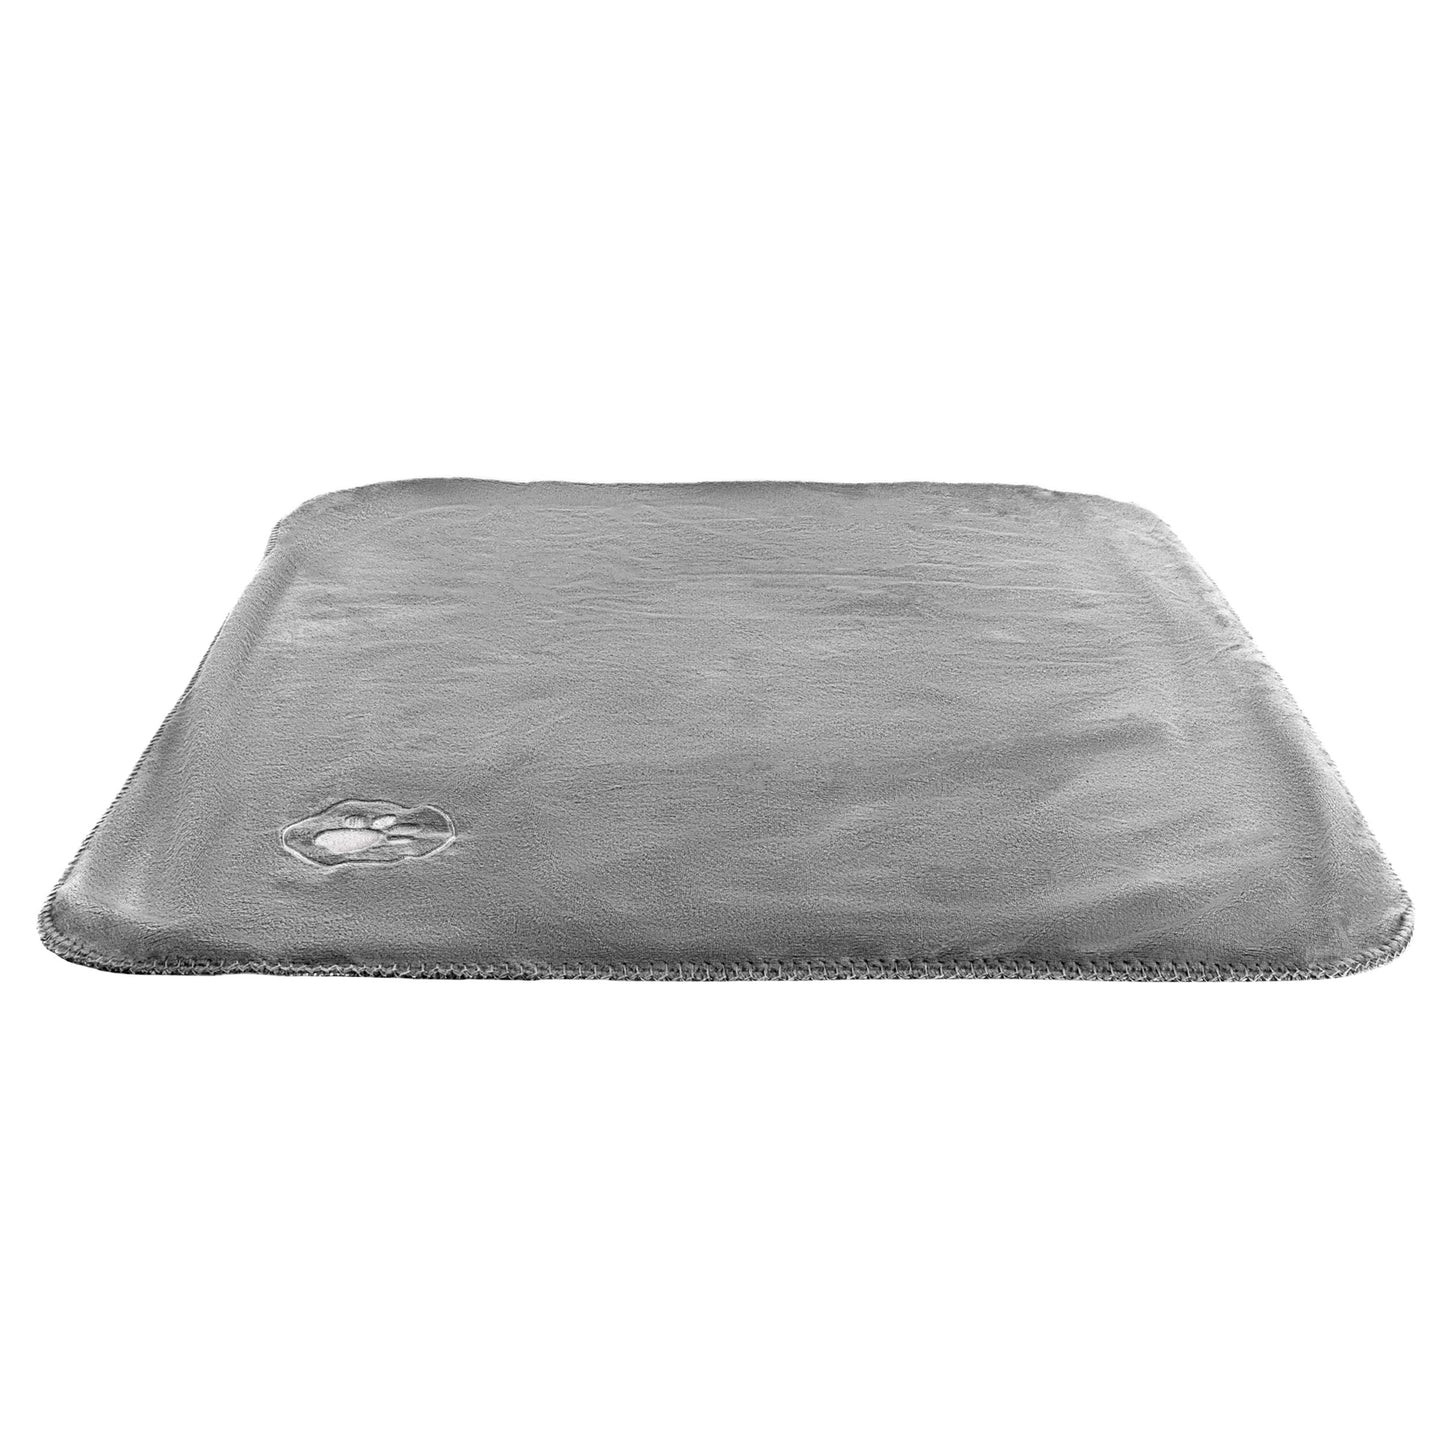 PETMAKER 30x40-Inch Waterproof Dog Blanket, Gray